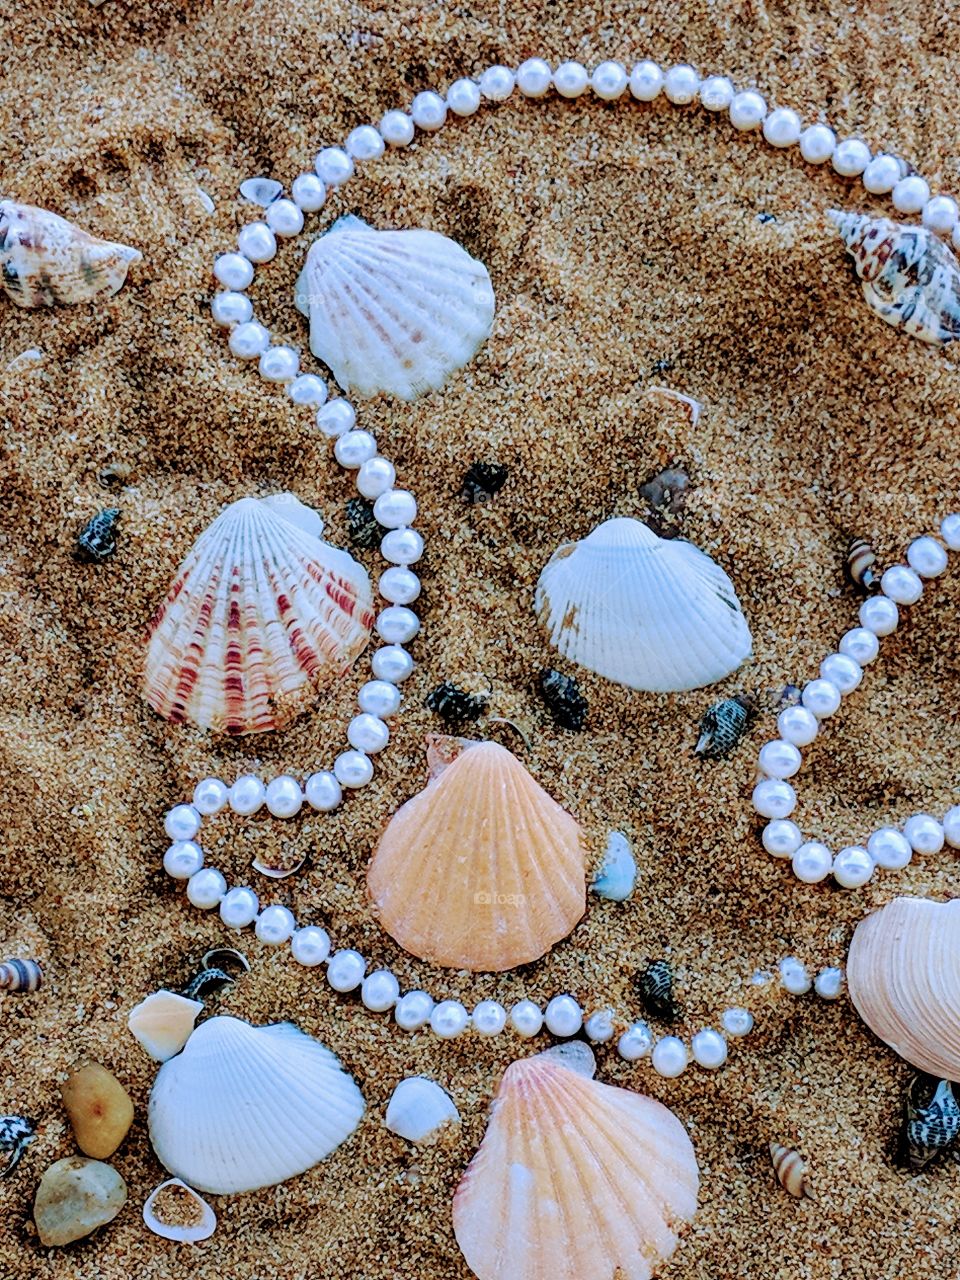 Seashells and pearls